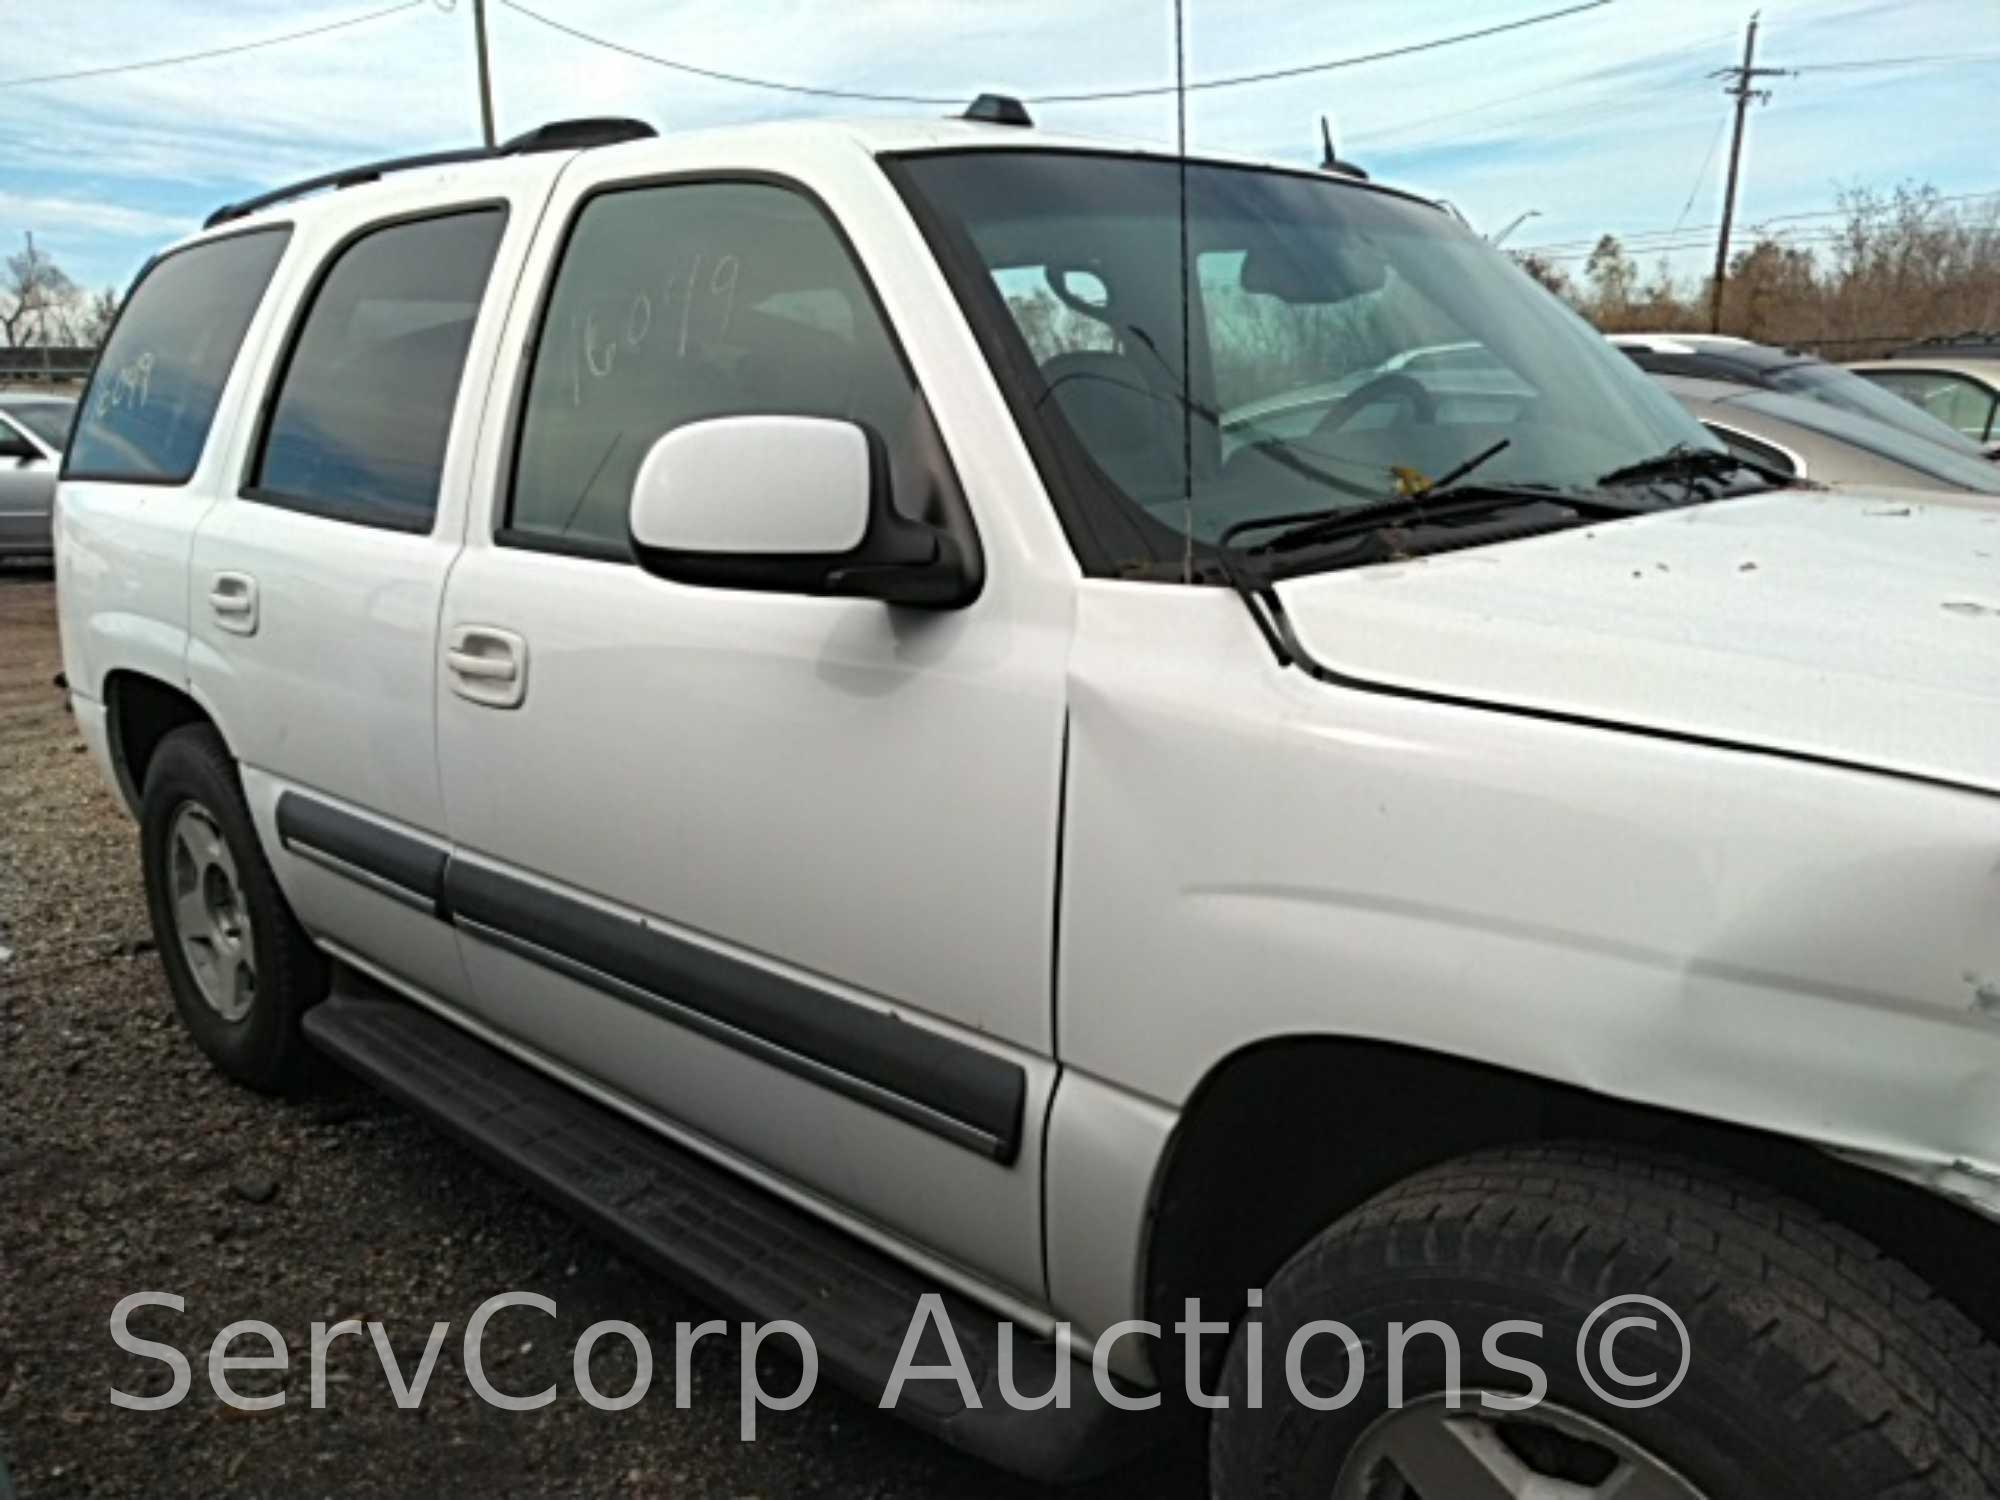 2004 Chevrolet Tahoe Multipurpose Vehicle (MPV), VIN # 1GNEC13Z44R295187